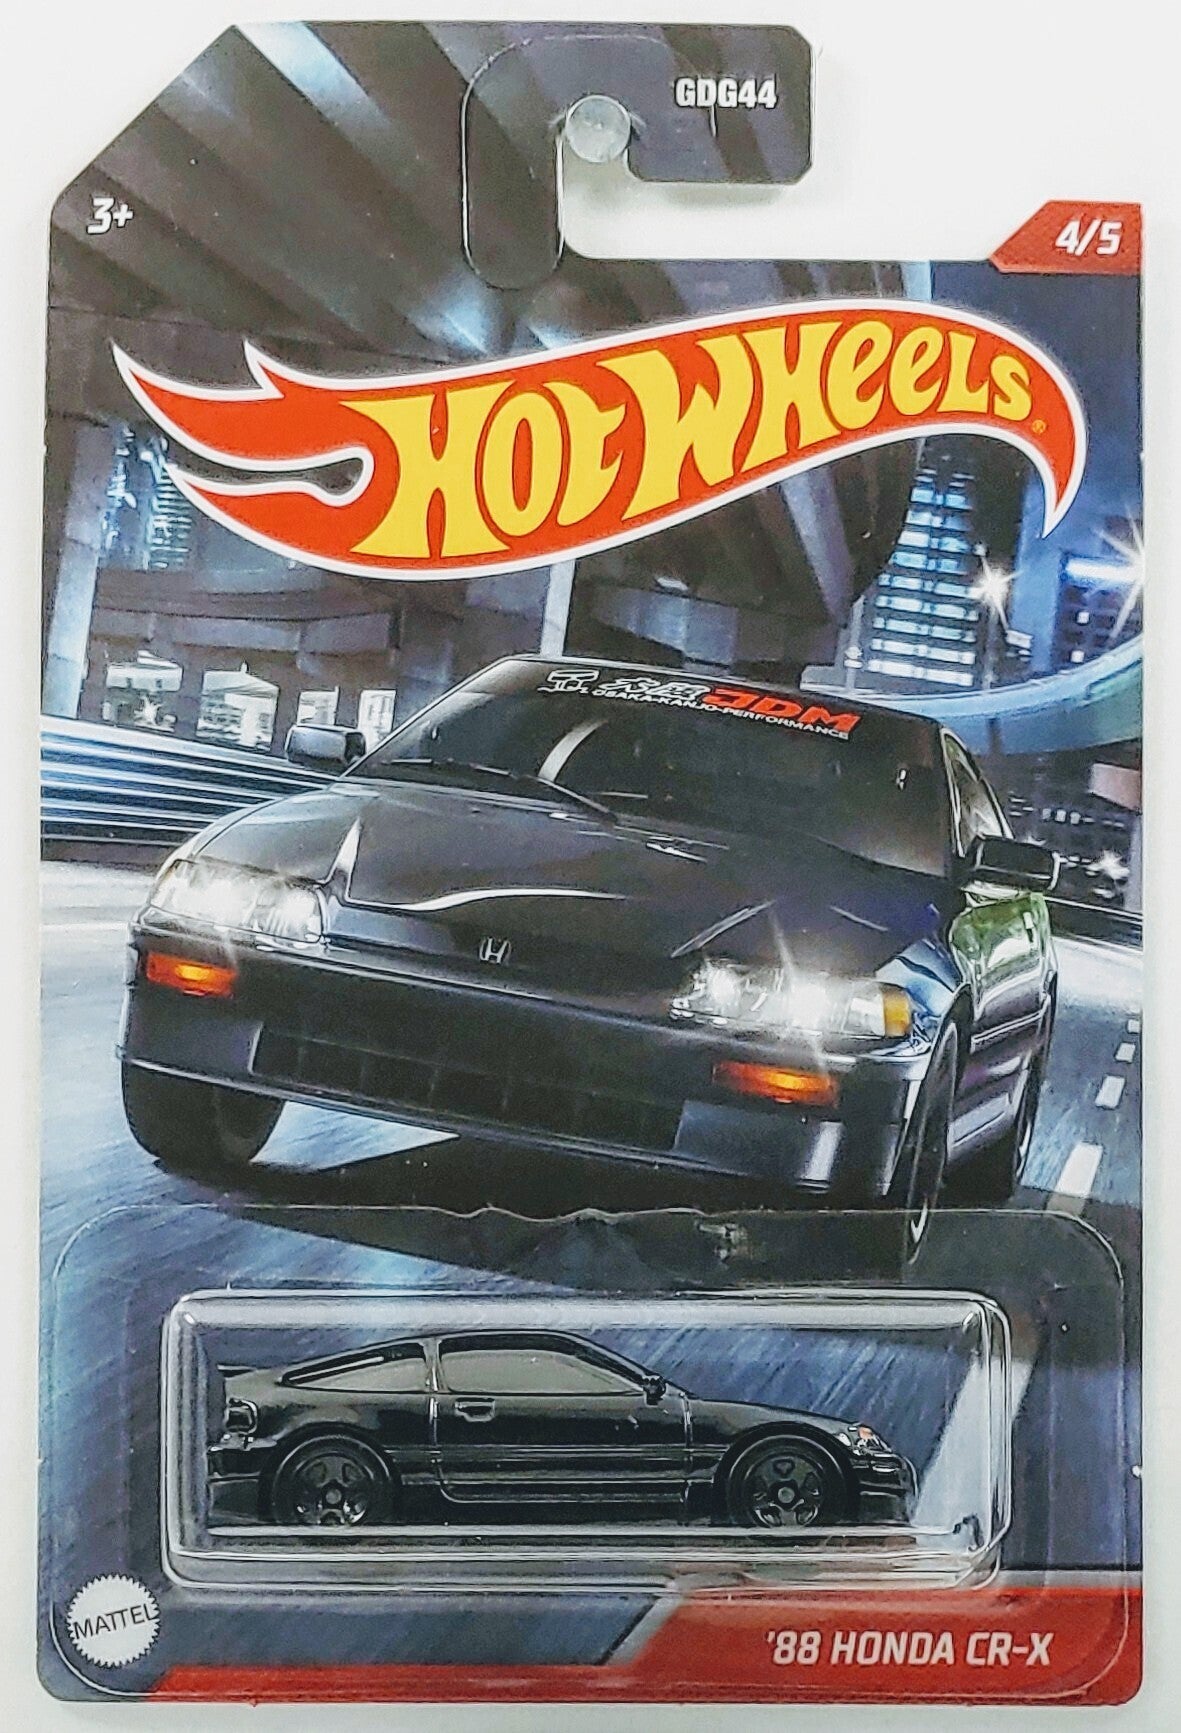 Hot Wheels 2021 - Street Racers 4/5 - '88 Honda CR-X - Black - Walmart Exclusive